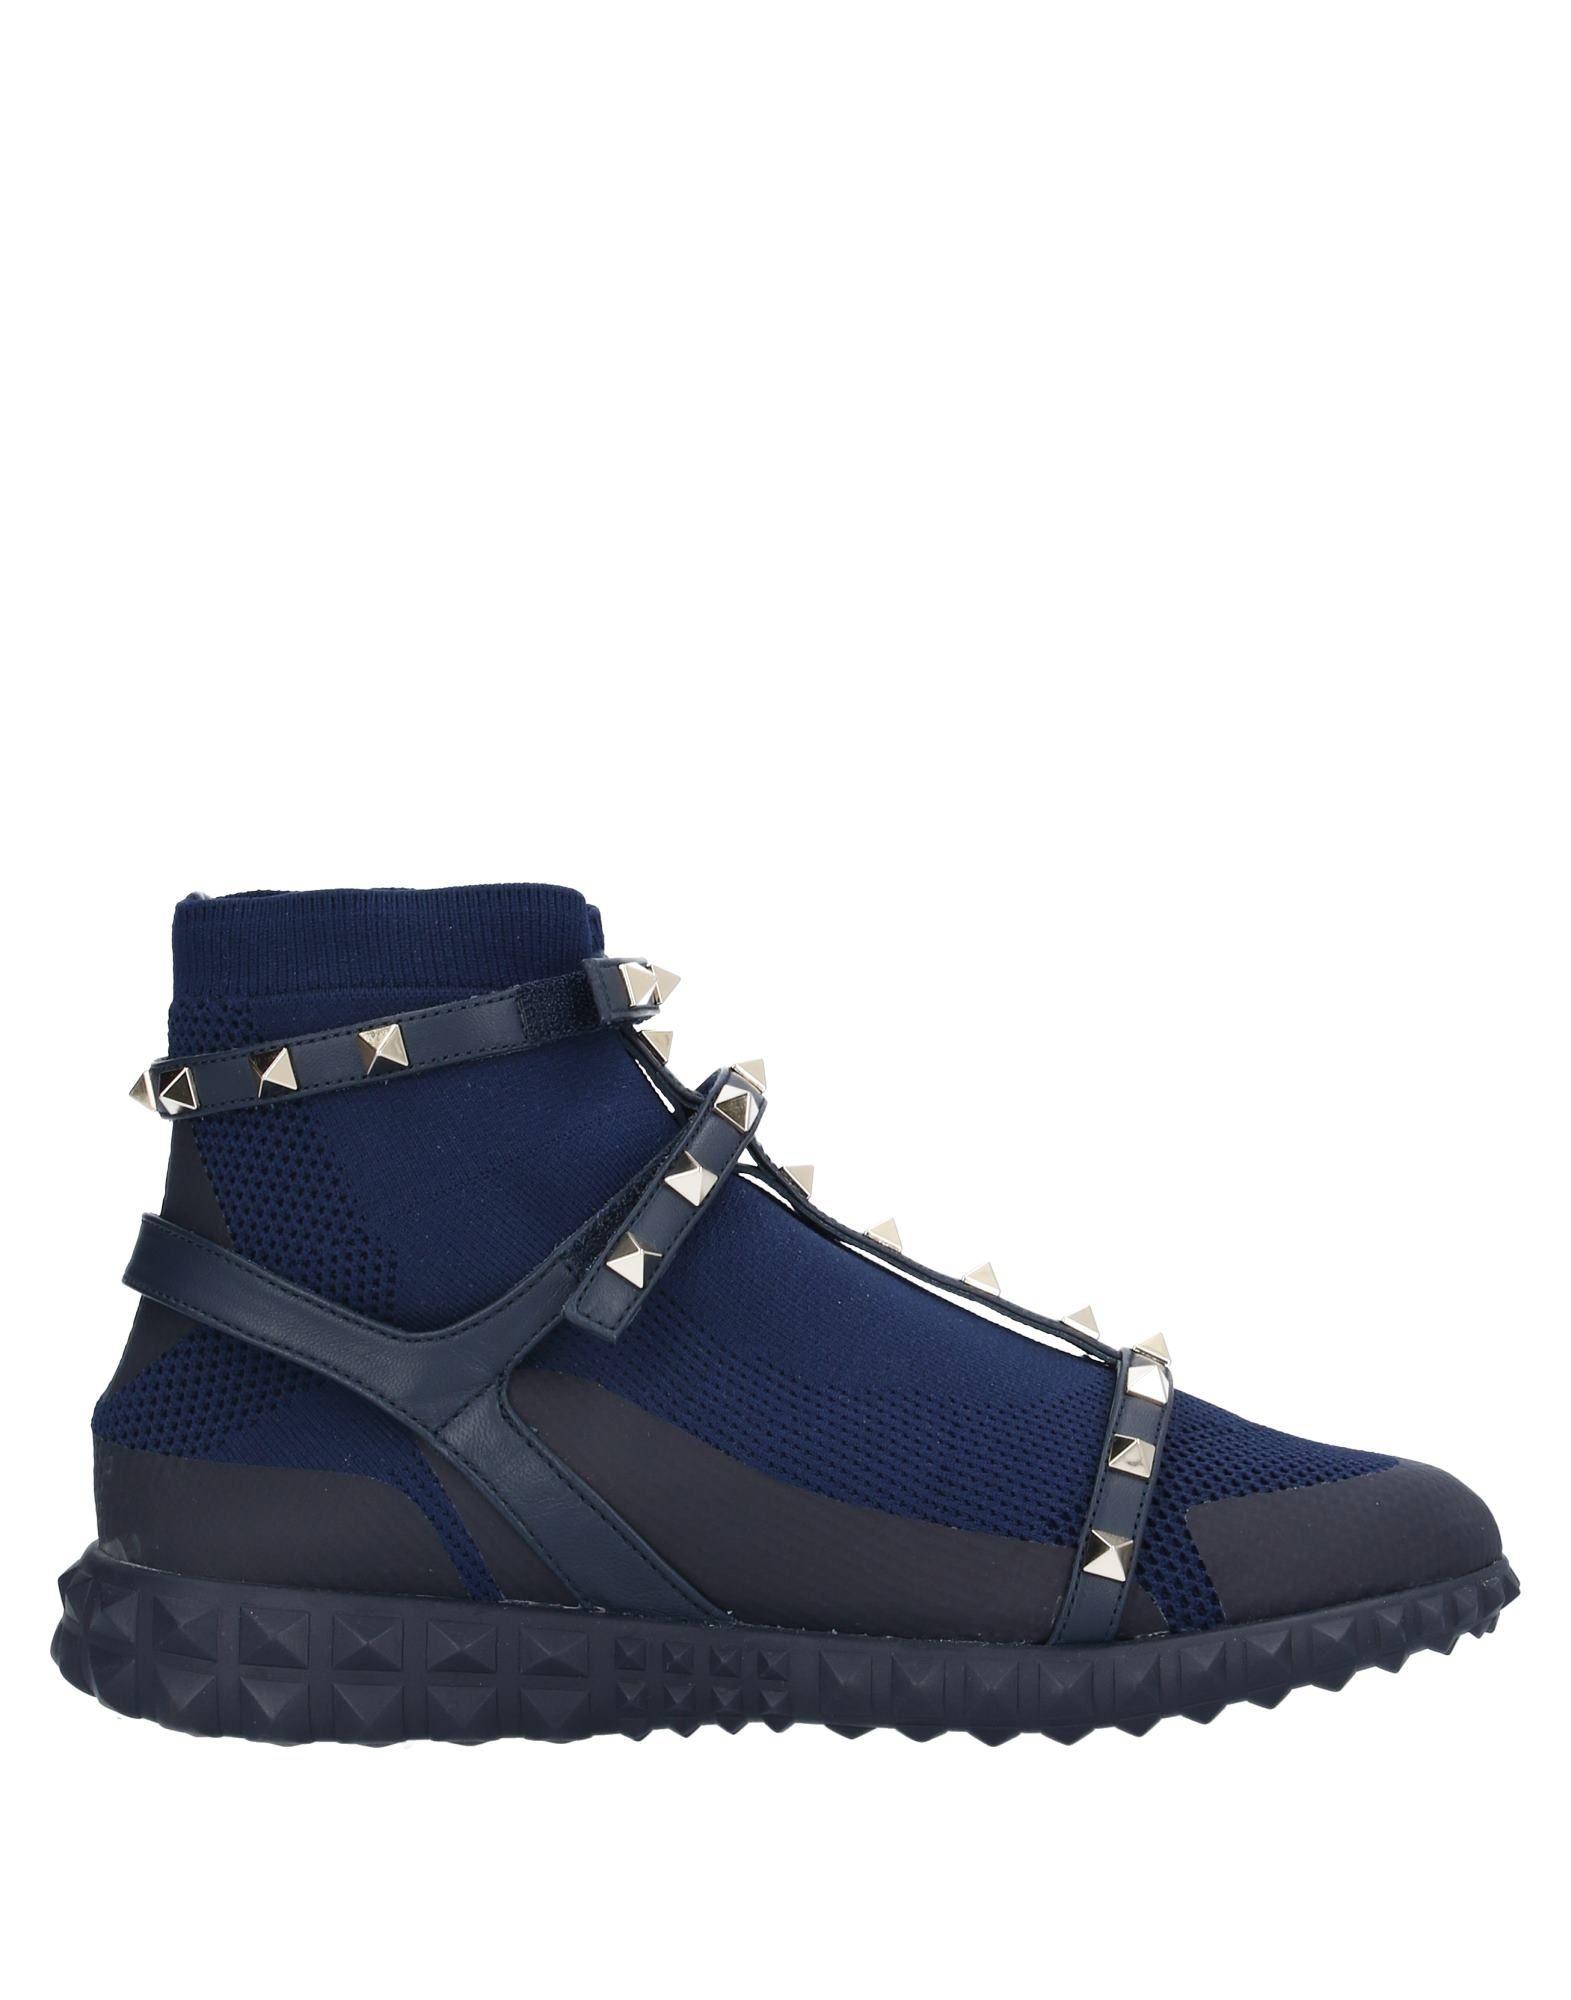 Valentino Garavani Rubber High-tops & Sneakers in Dark Blue (Blue) - Lyst